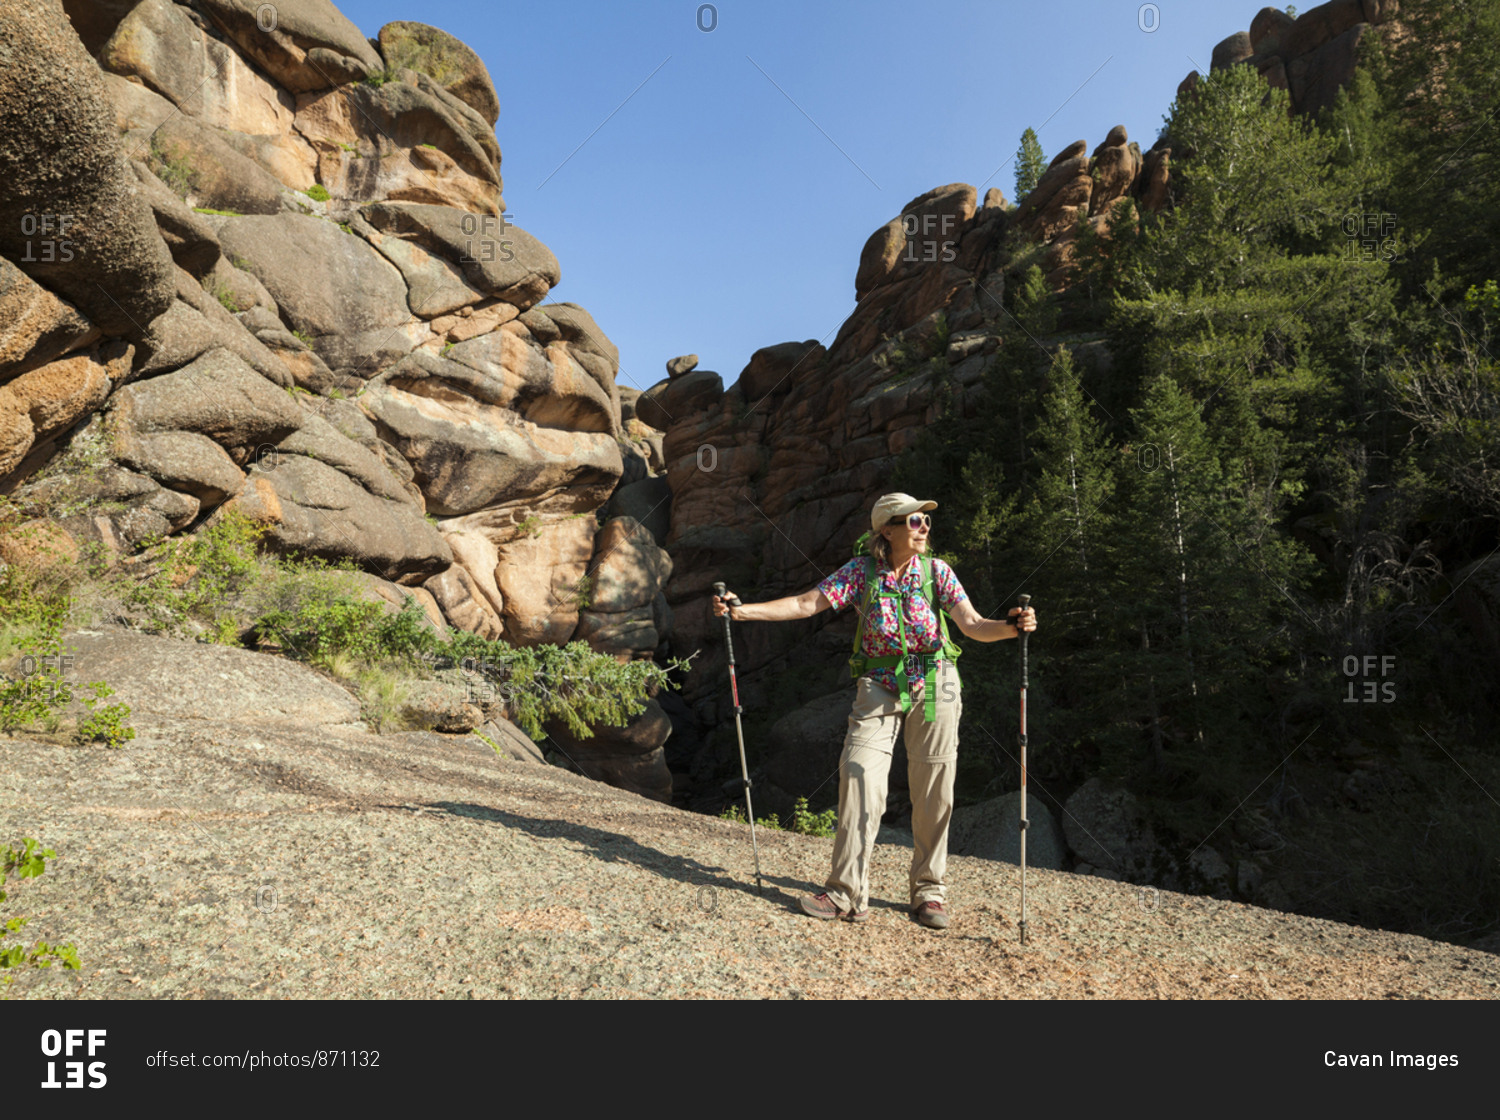 Senior woman hiker among rock formations in lost creek wilderness